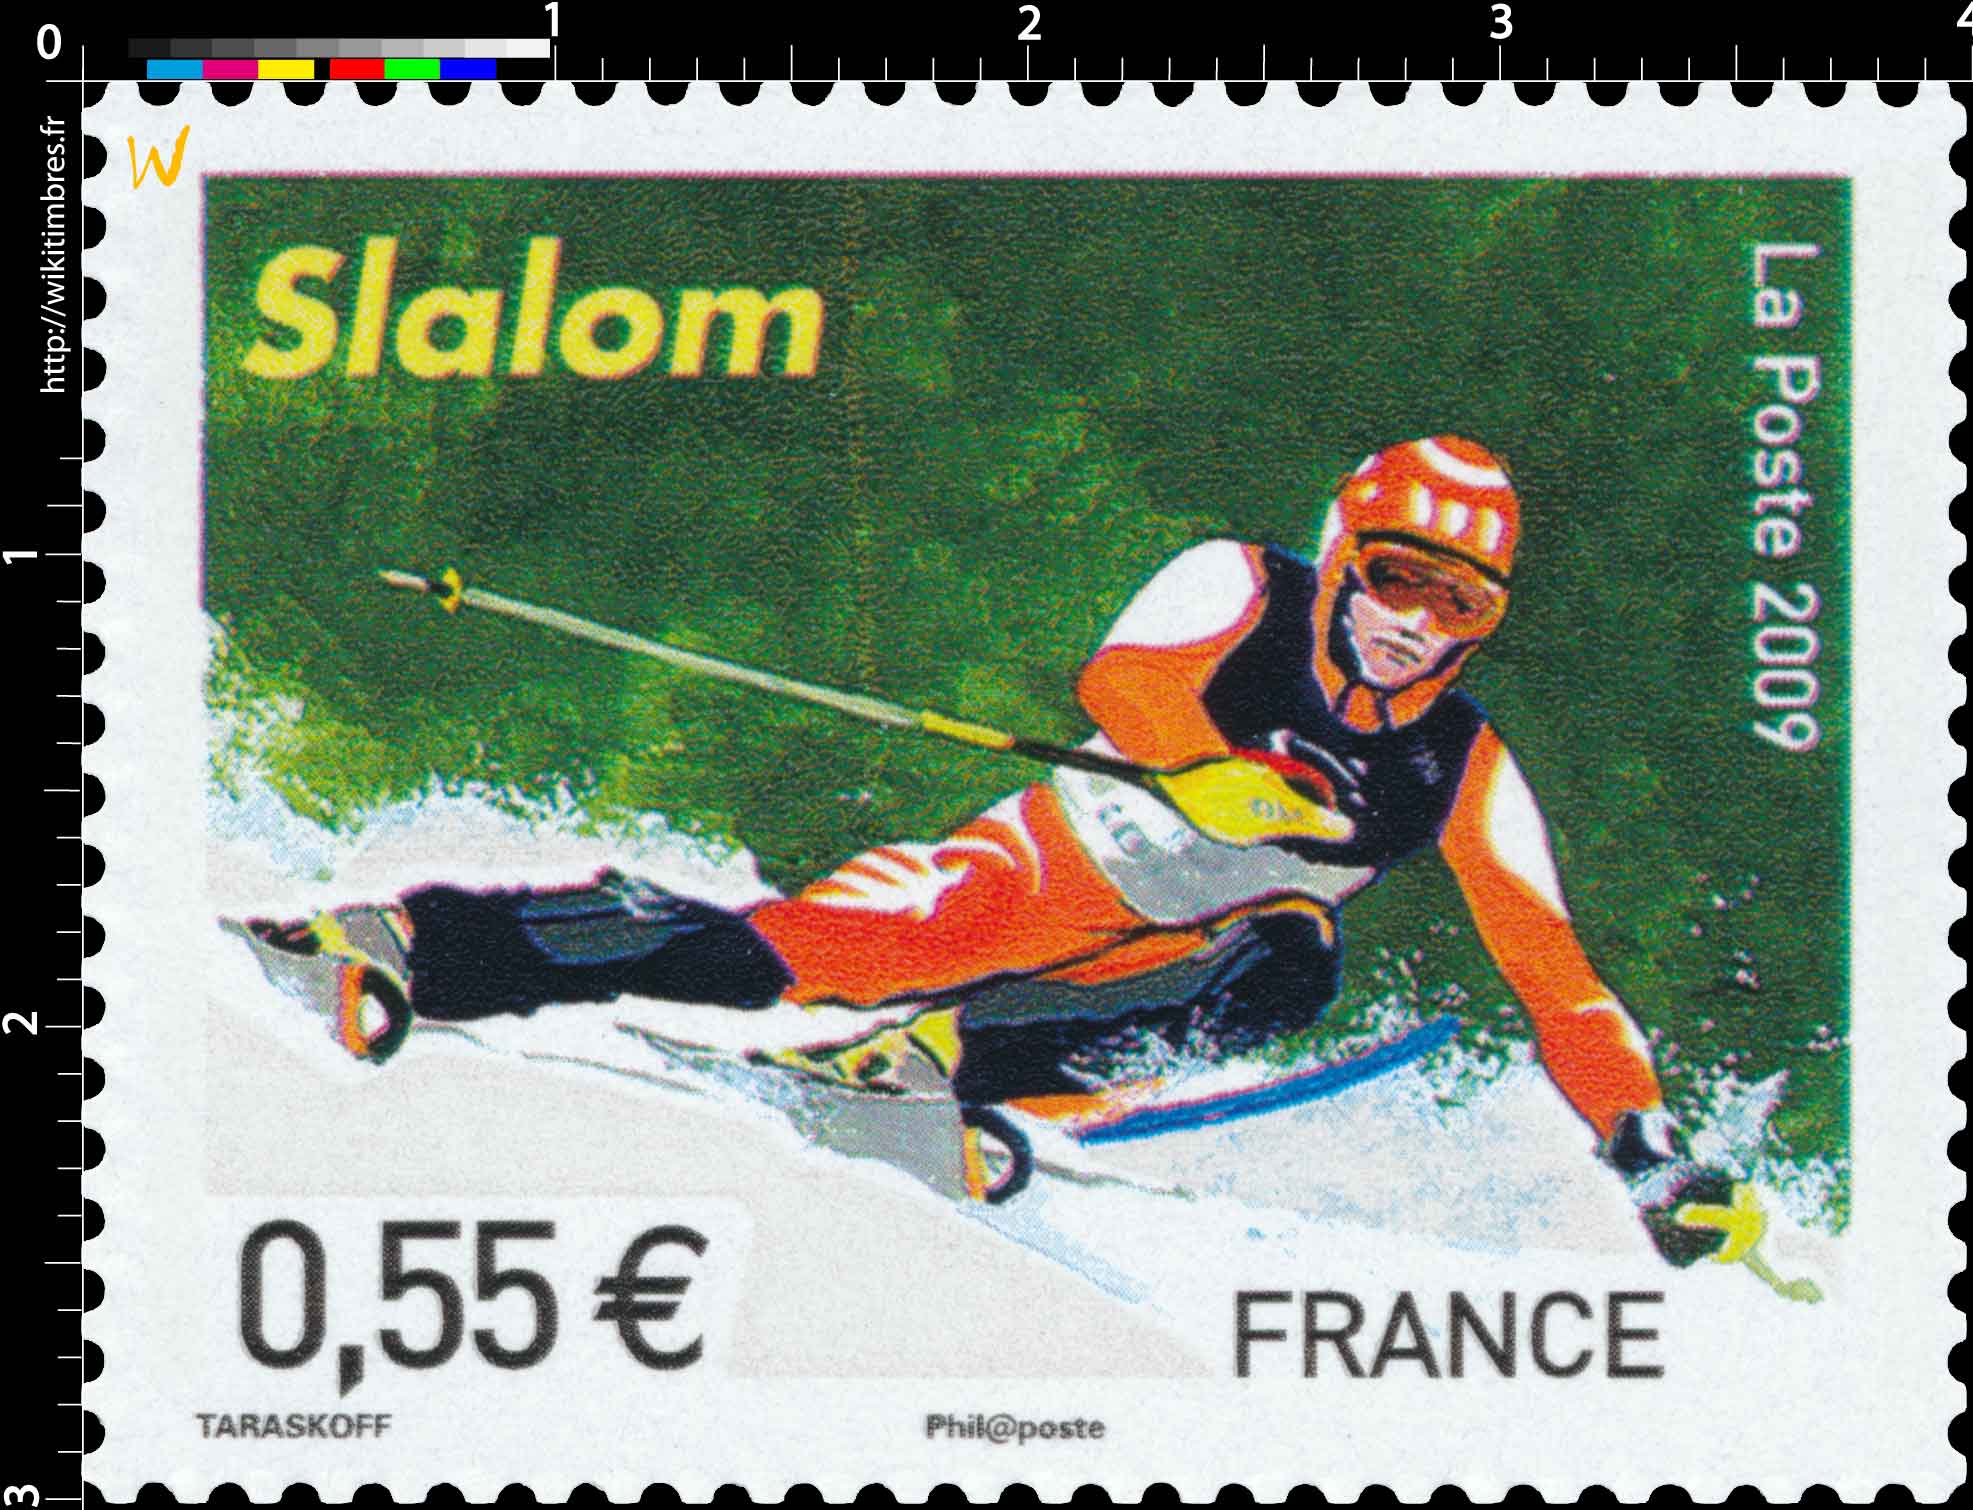 2009 Slalom